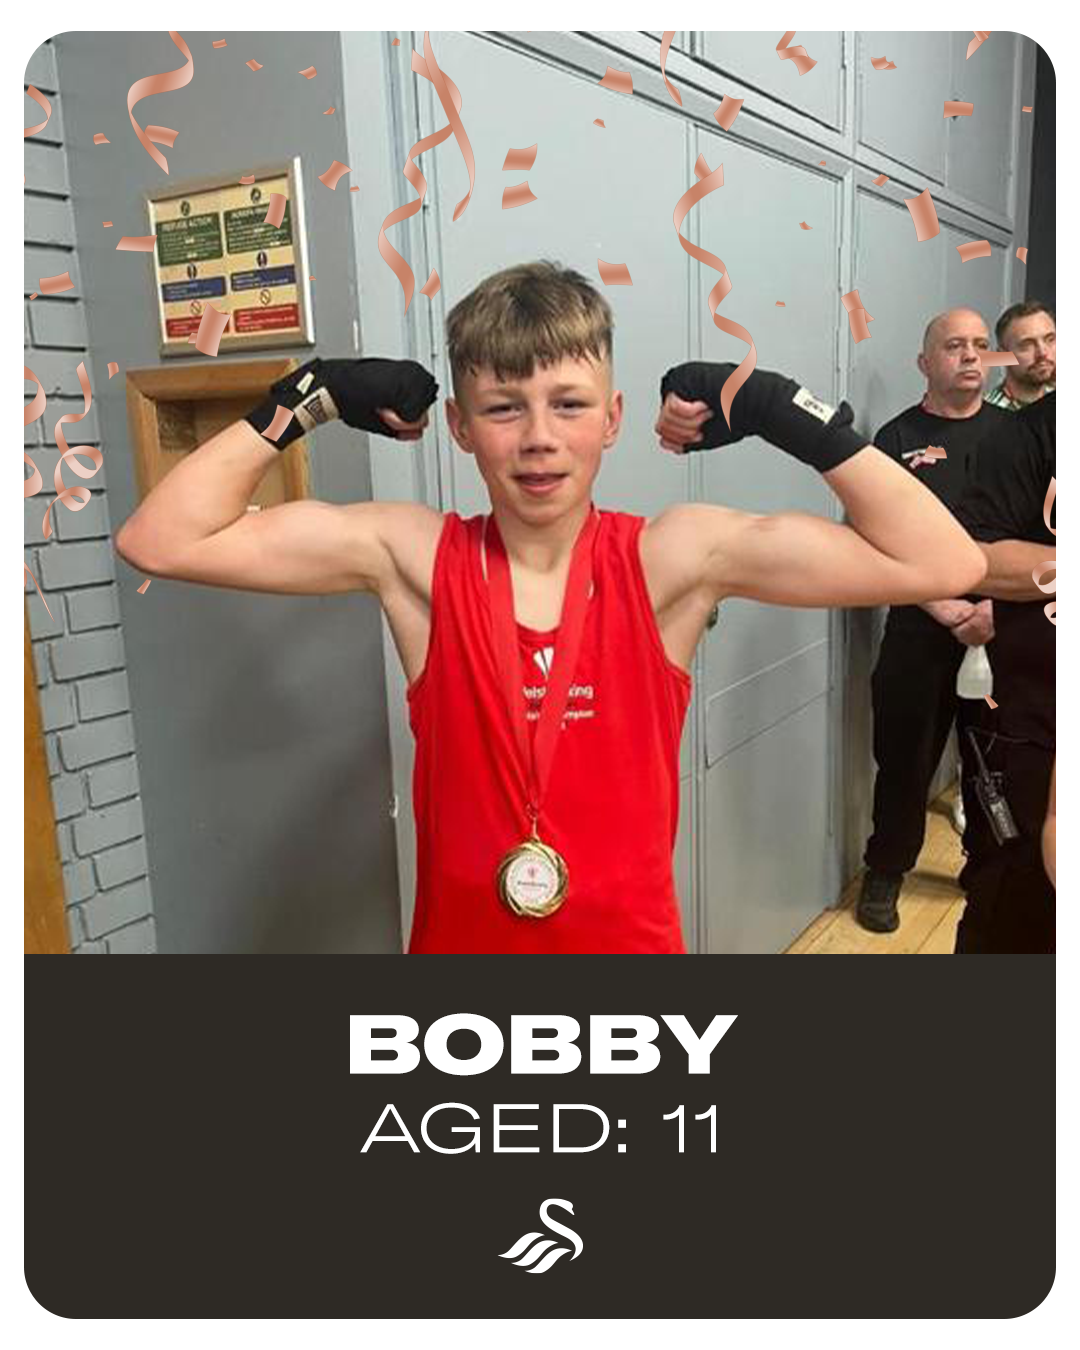 Bobby, Aged 11